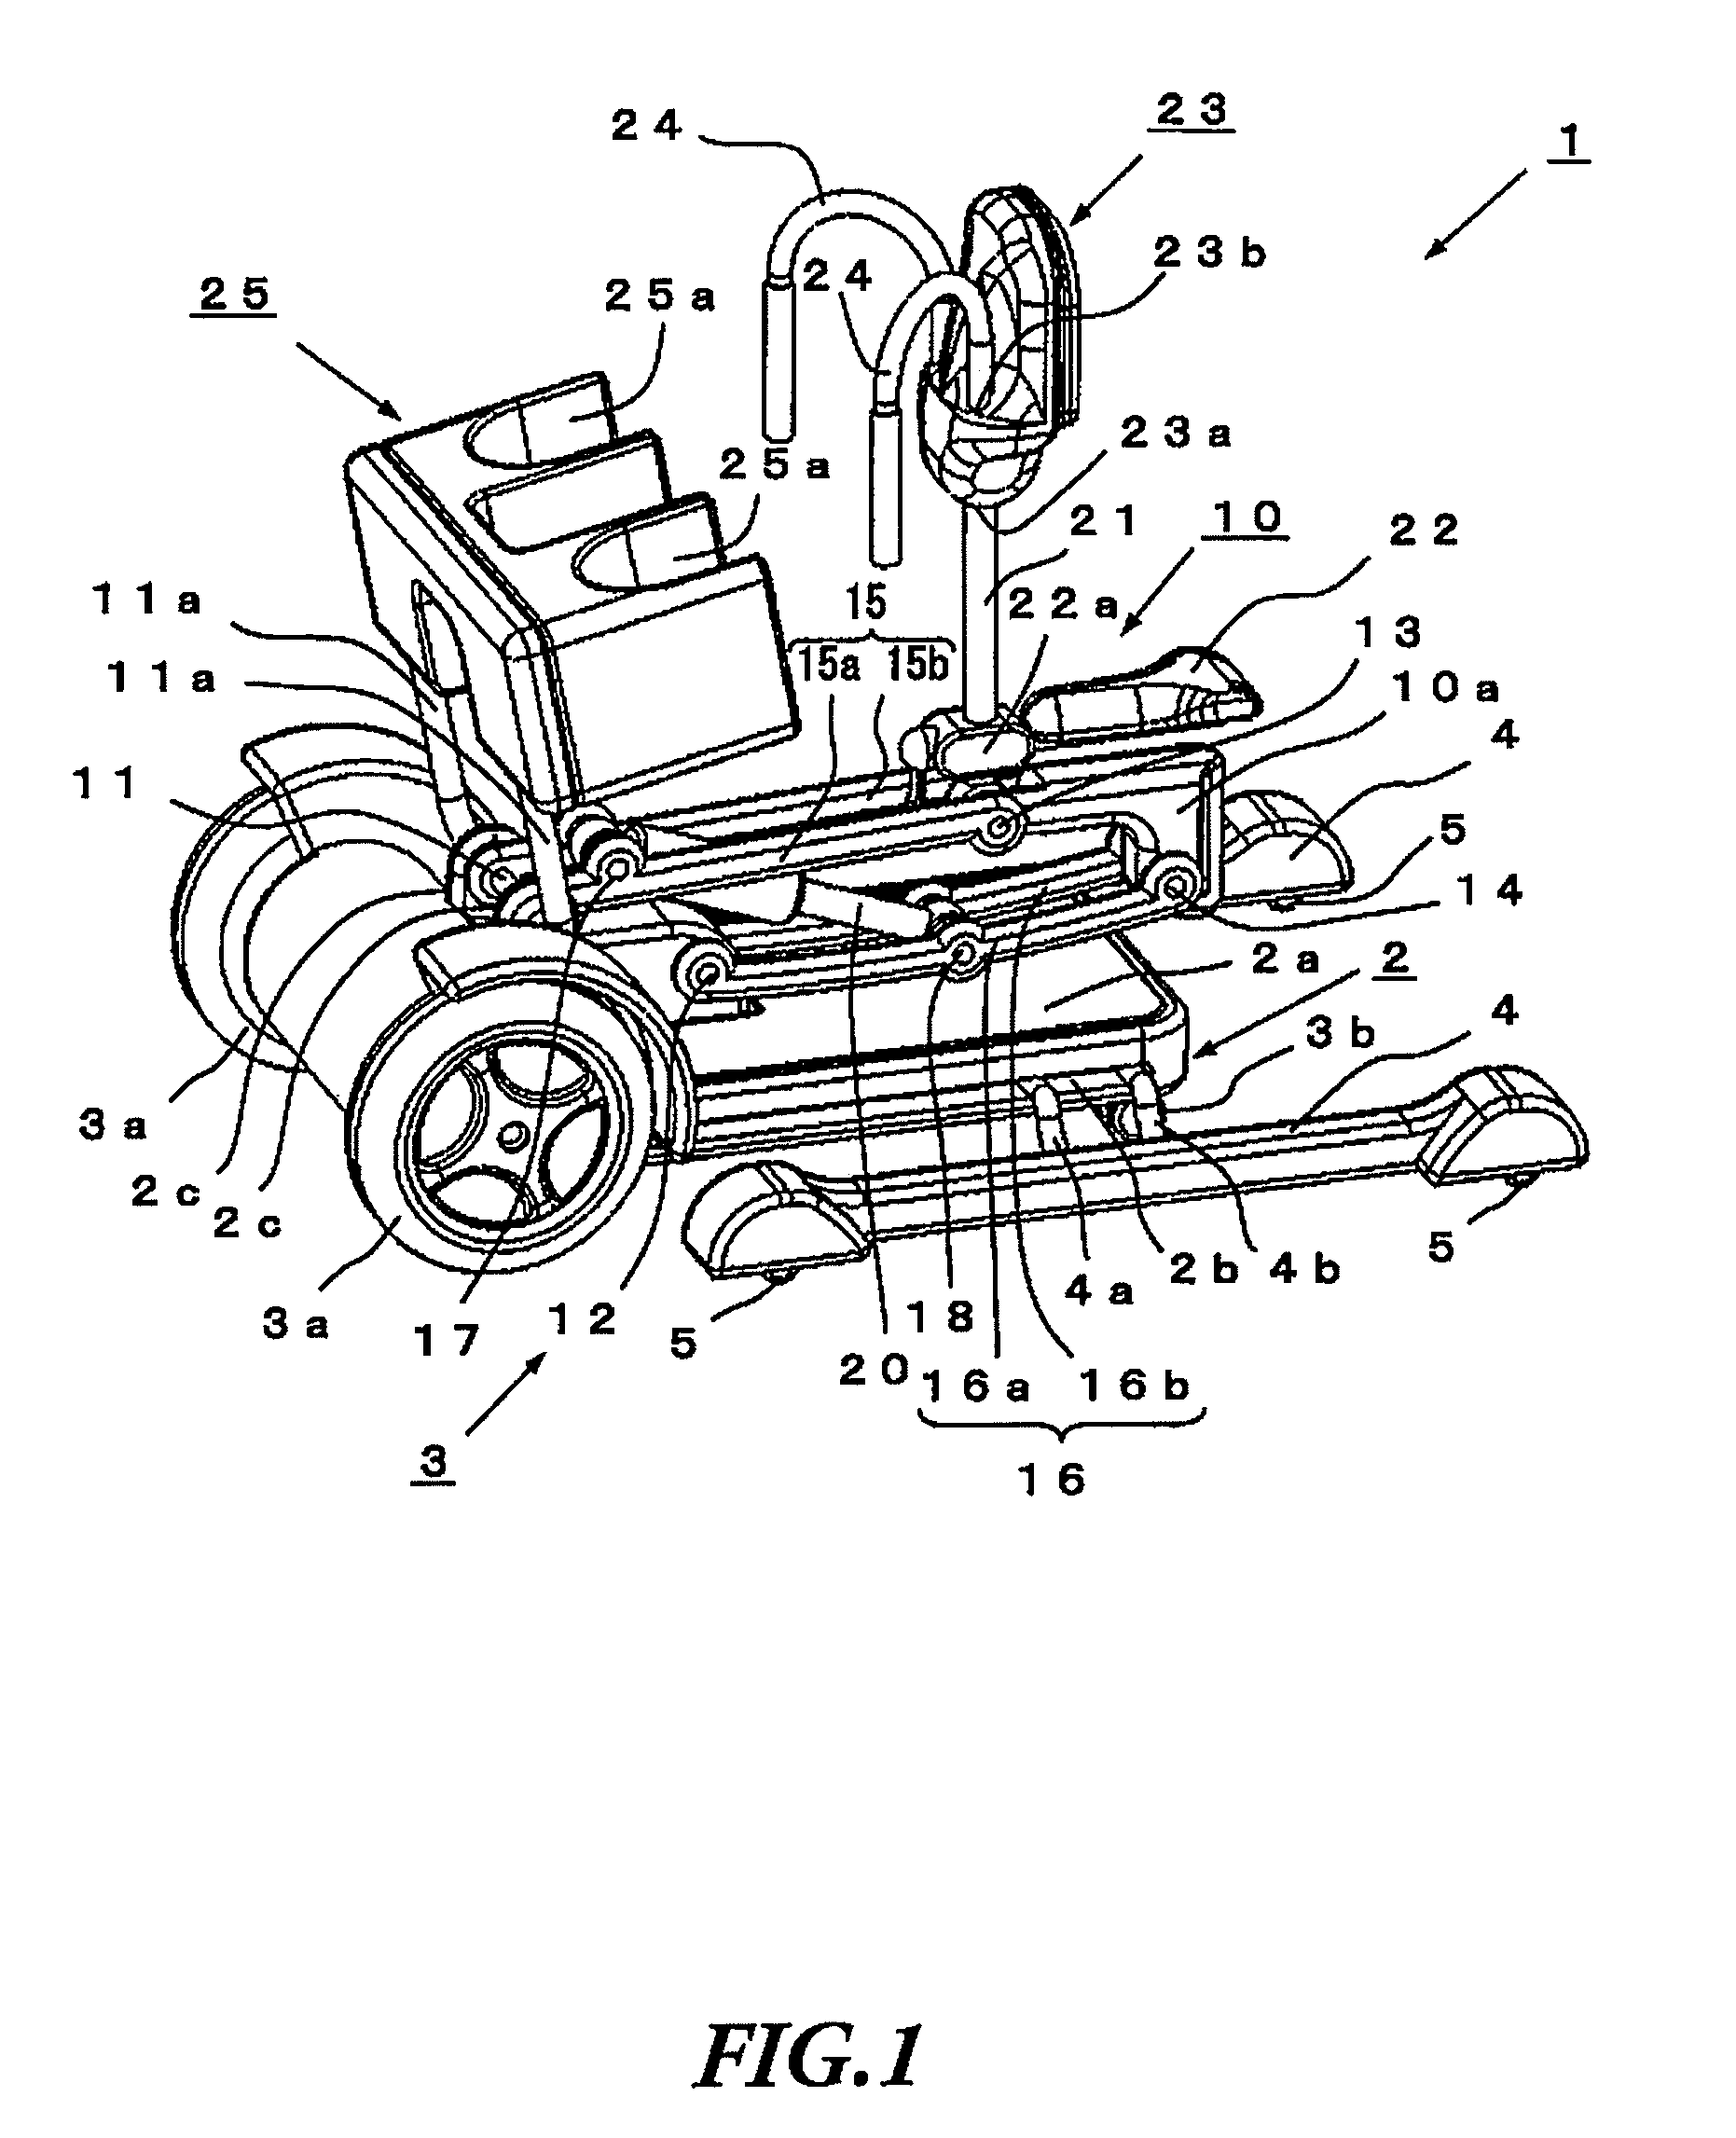 Transfer and locomotion apparatus